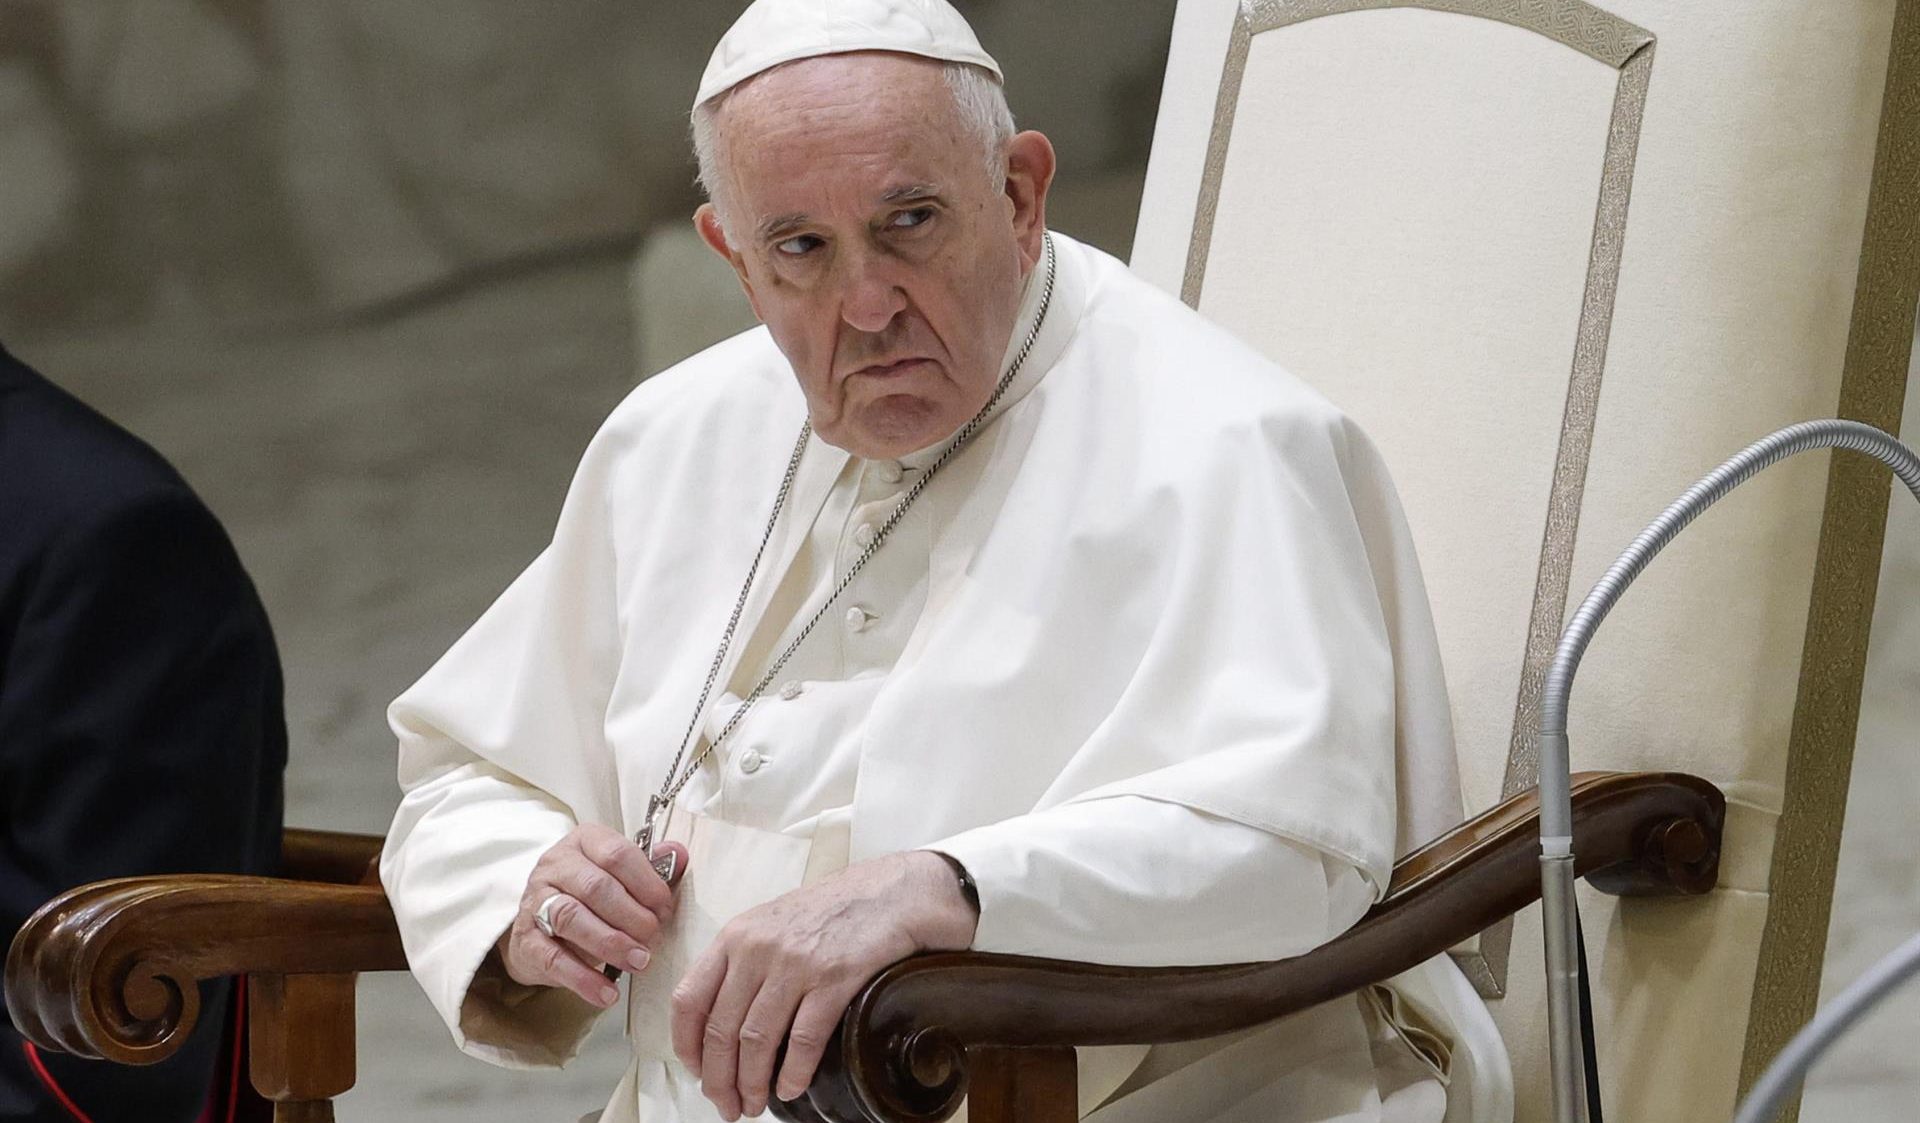 El papa Francisco confirmó que dialoga con el régimen de Nicaragua